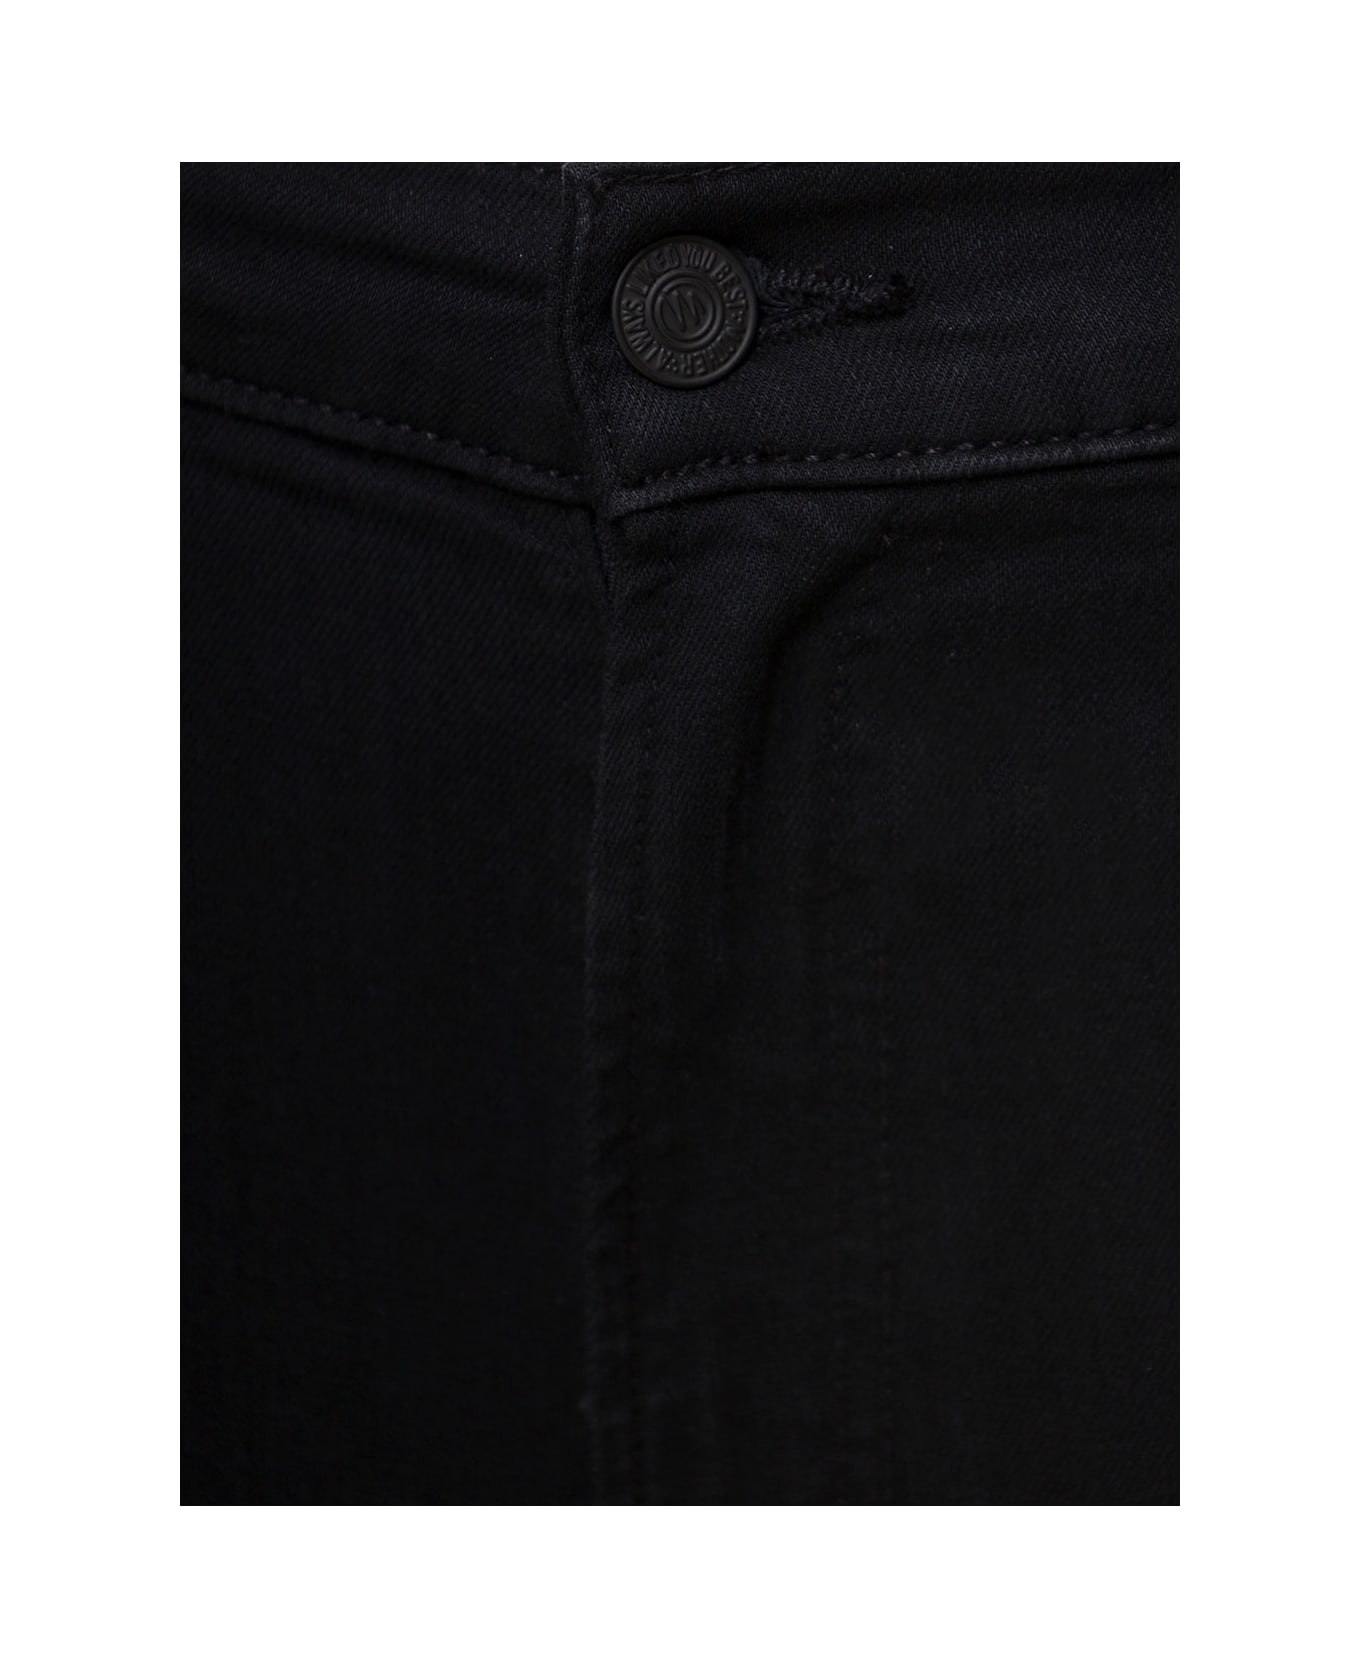 Mother Woman's Le Insider Crop Black Denim Jeans - Black